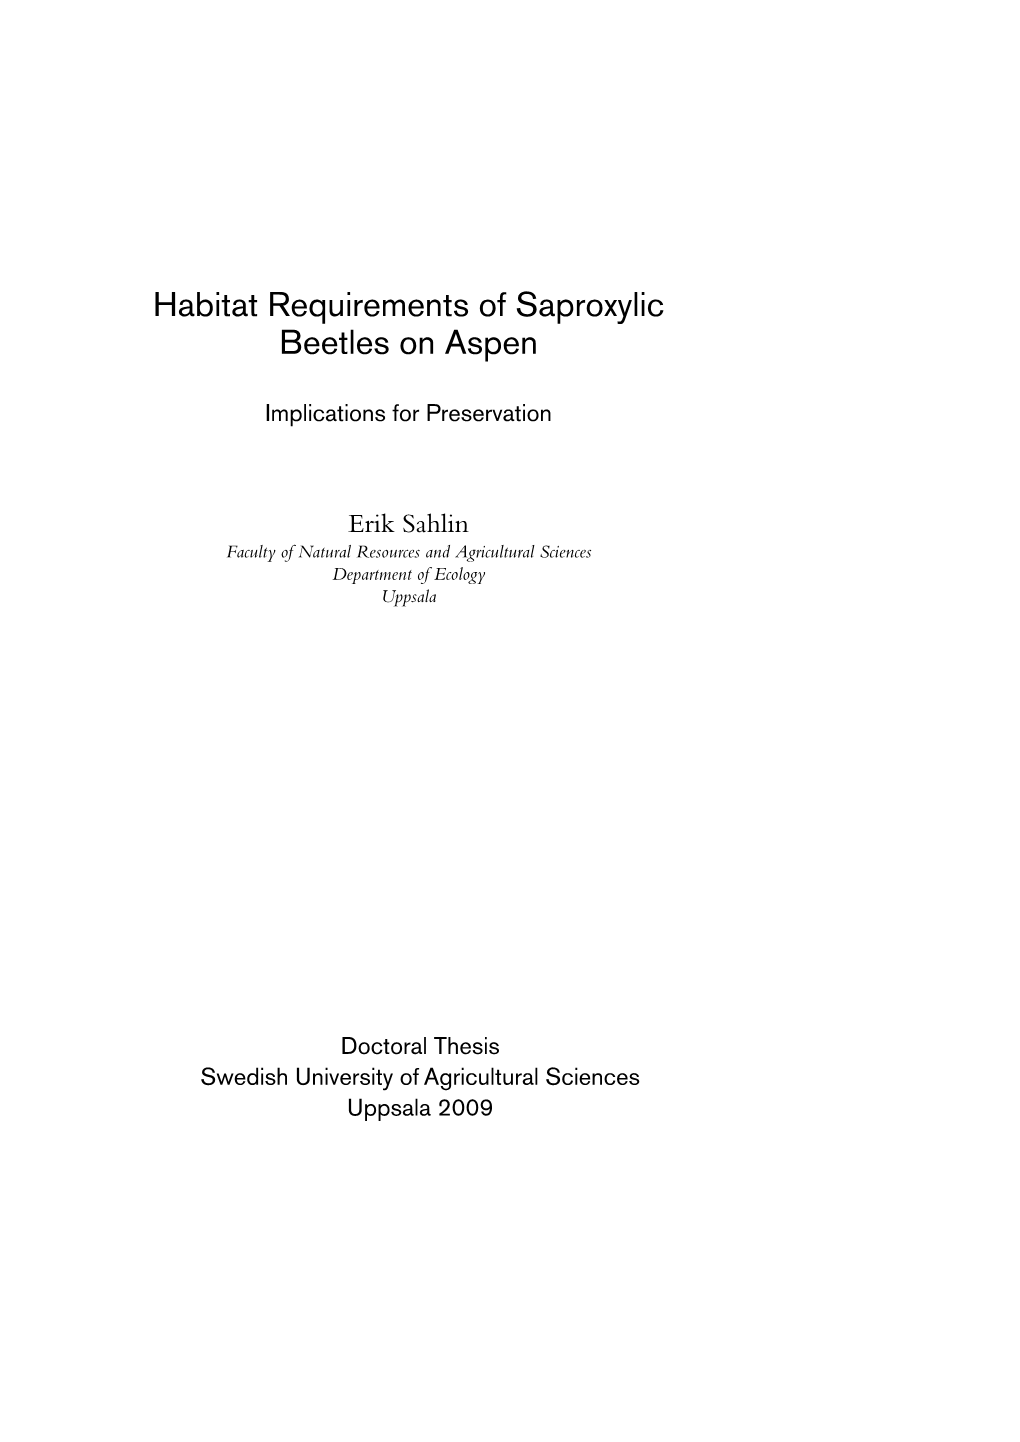 Habitat Requirements of Saproxylic Beetles on Aspen